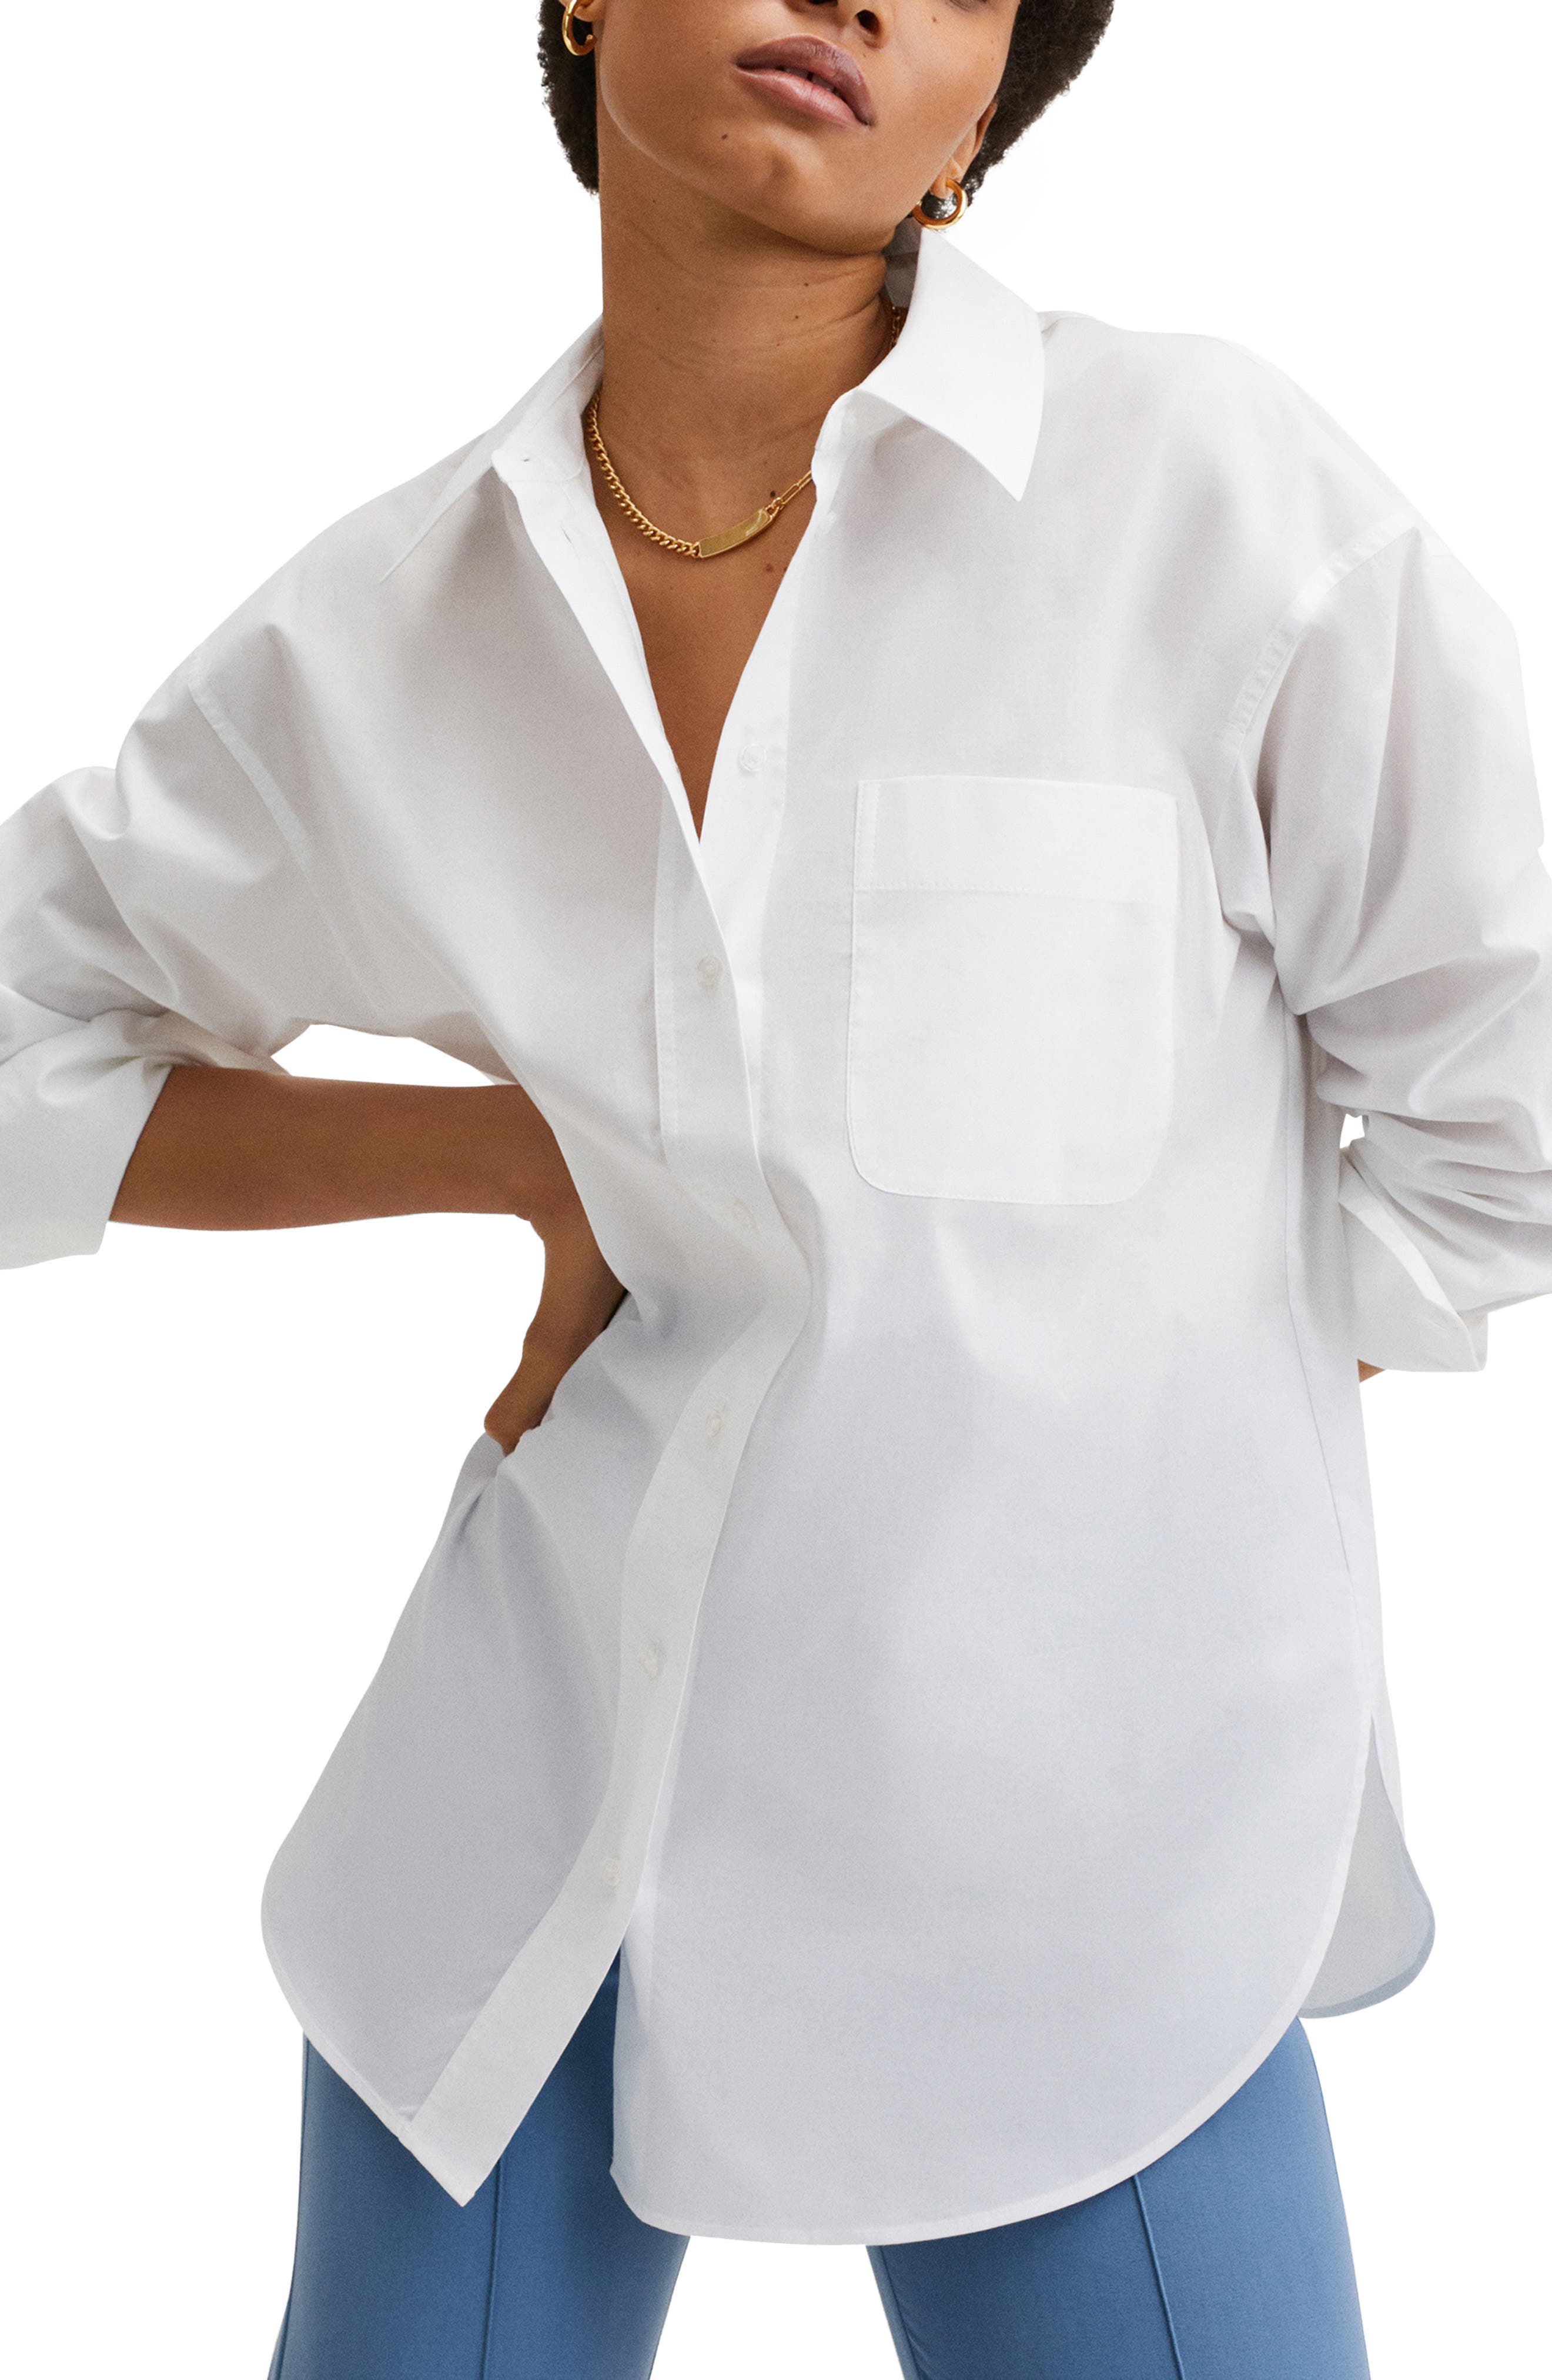 WOMEN FASHION Shirts & T-shirts Elegant Mango blouse discount 52% White S 